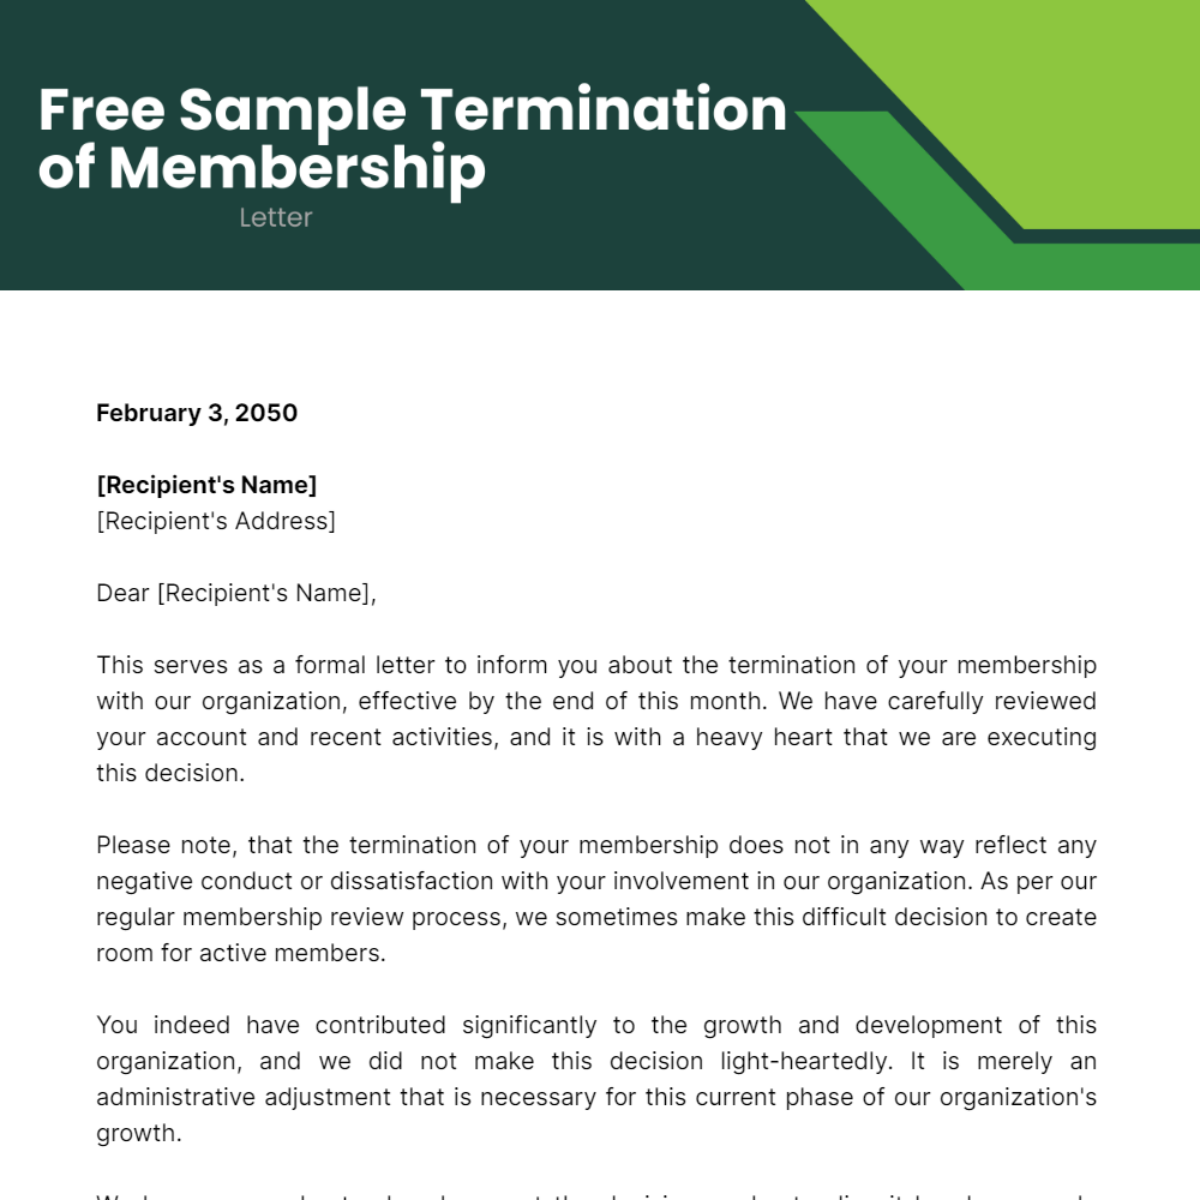 Sample Termination of Membership Letter Template